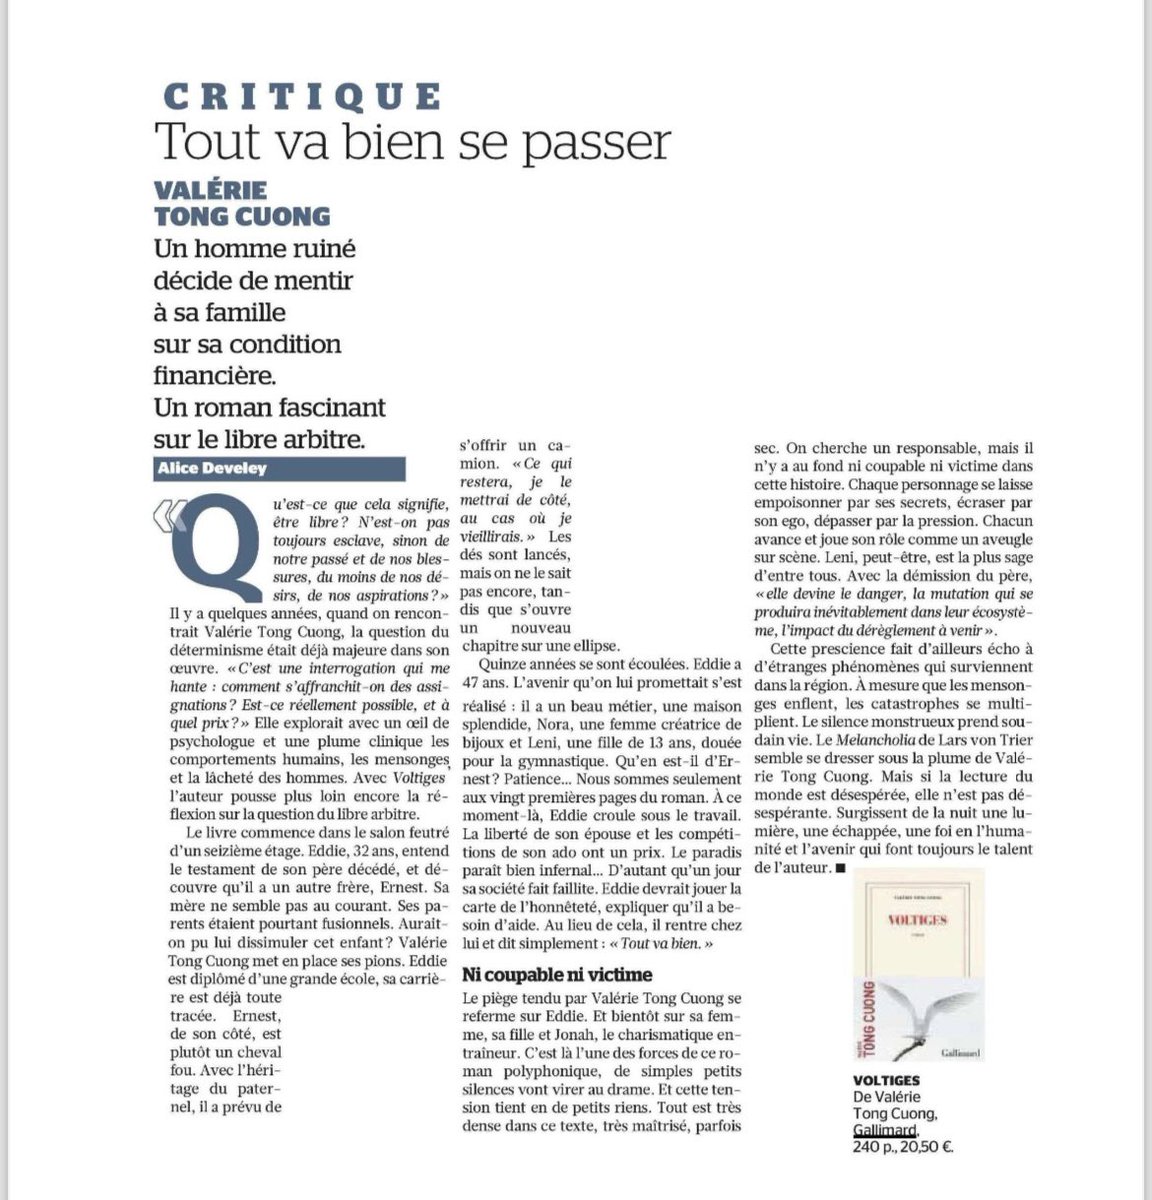 Merci @AliceDeveley @Le_Figaro #voltiges @Gallimard